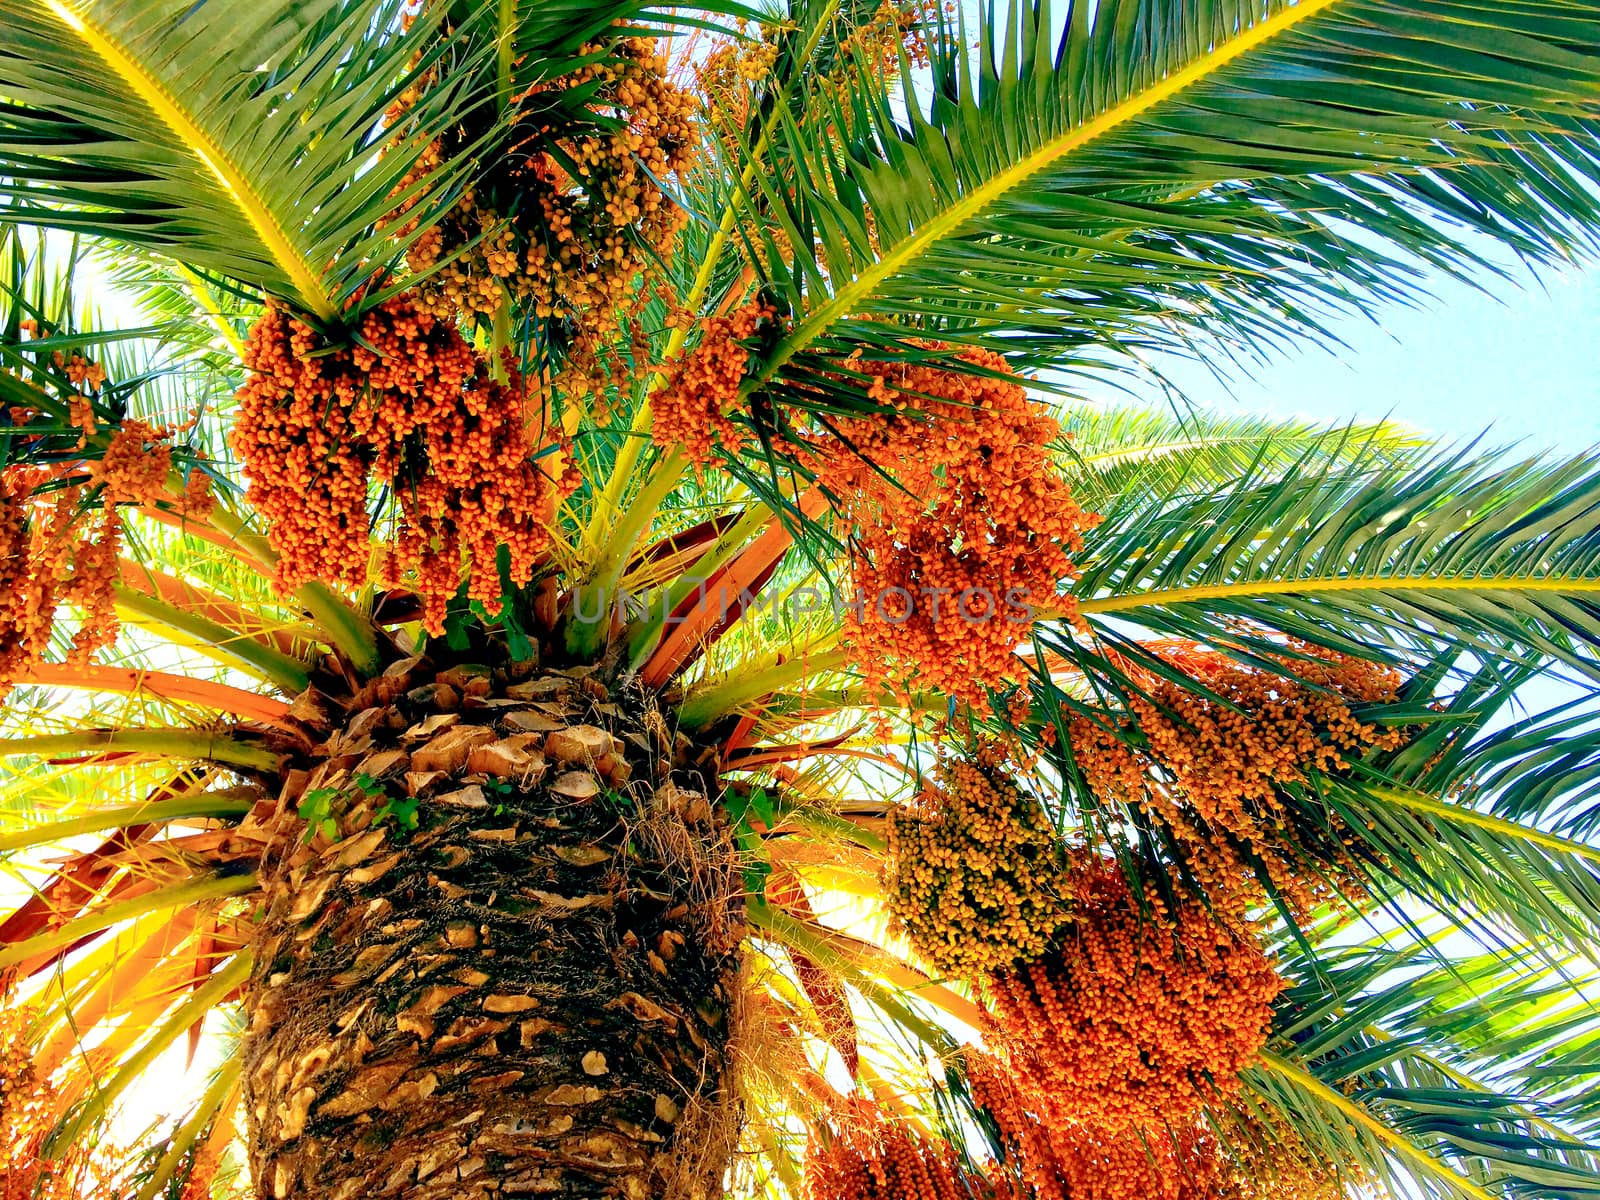 Palm tree with orange fruits by anikasalsera